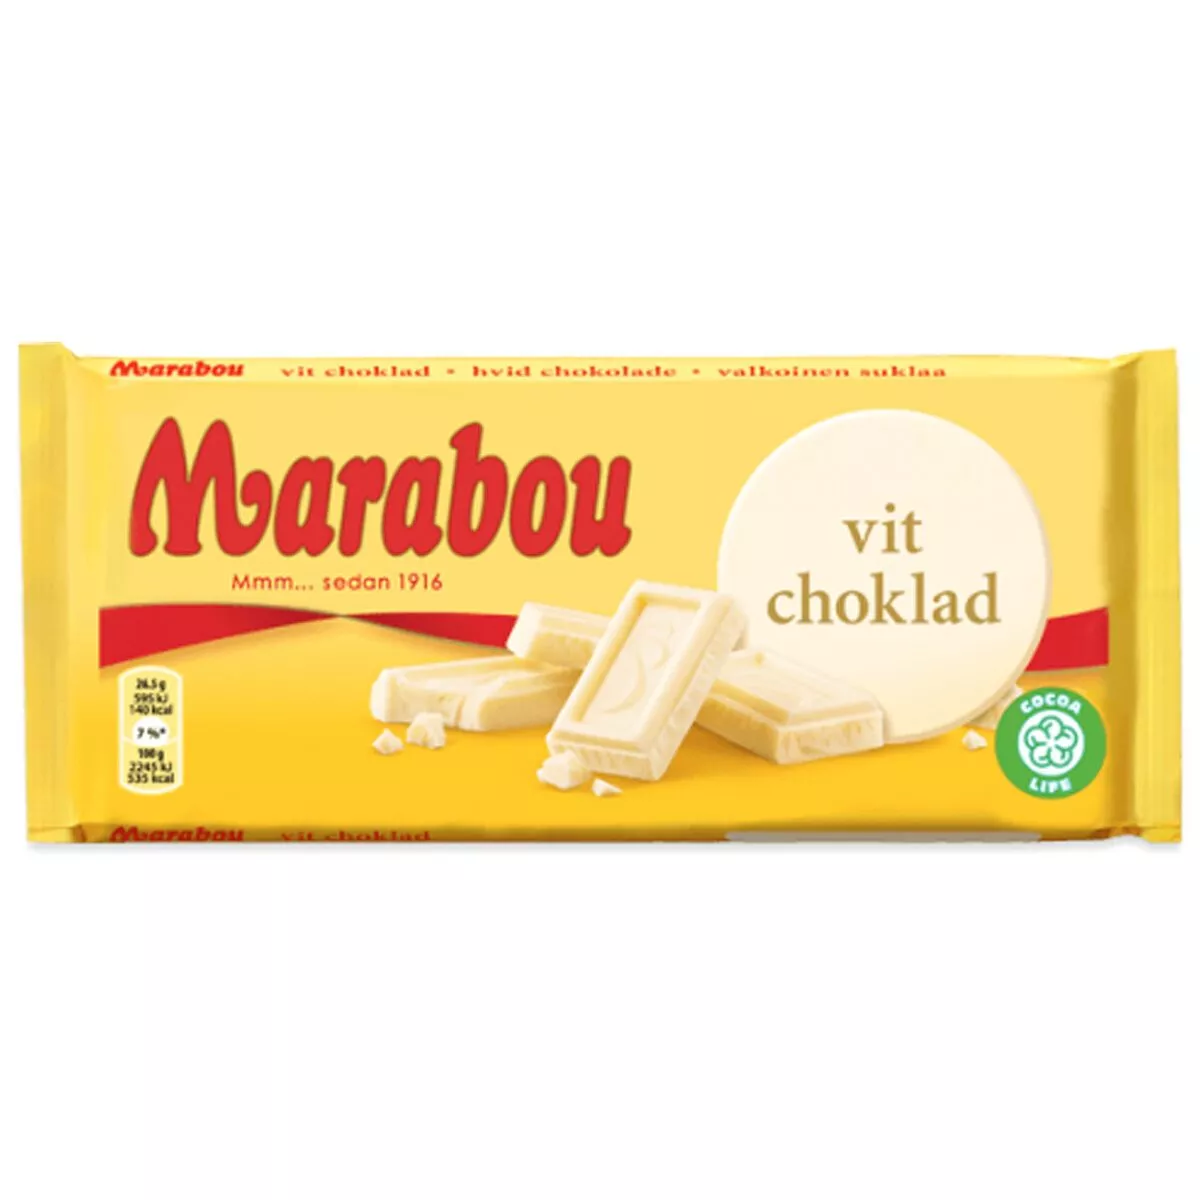 Marabou vit choklad - weiße Schokolade (180g) 1